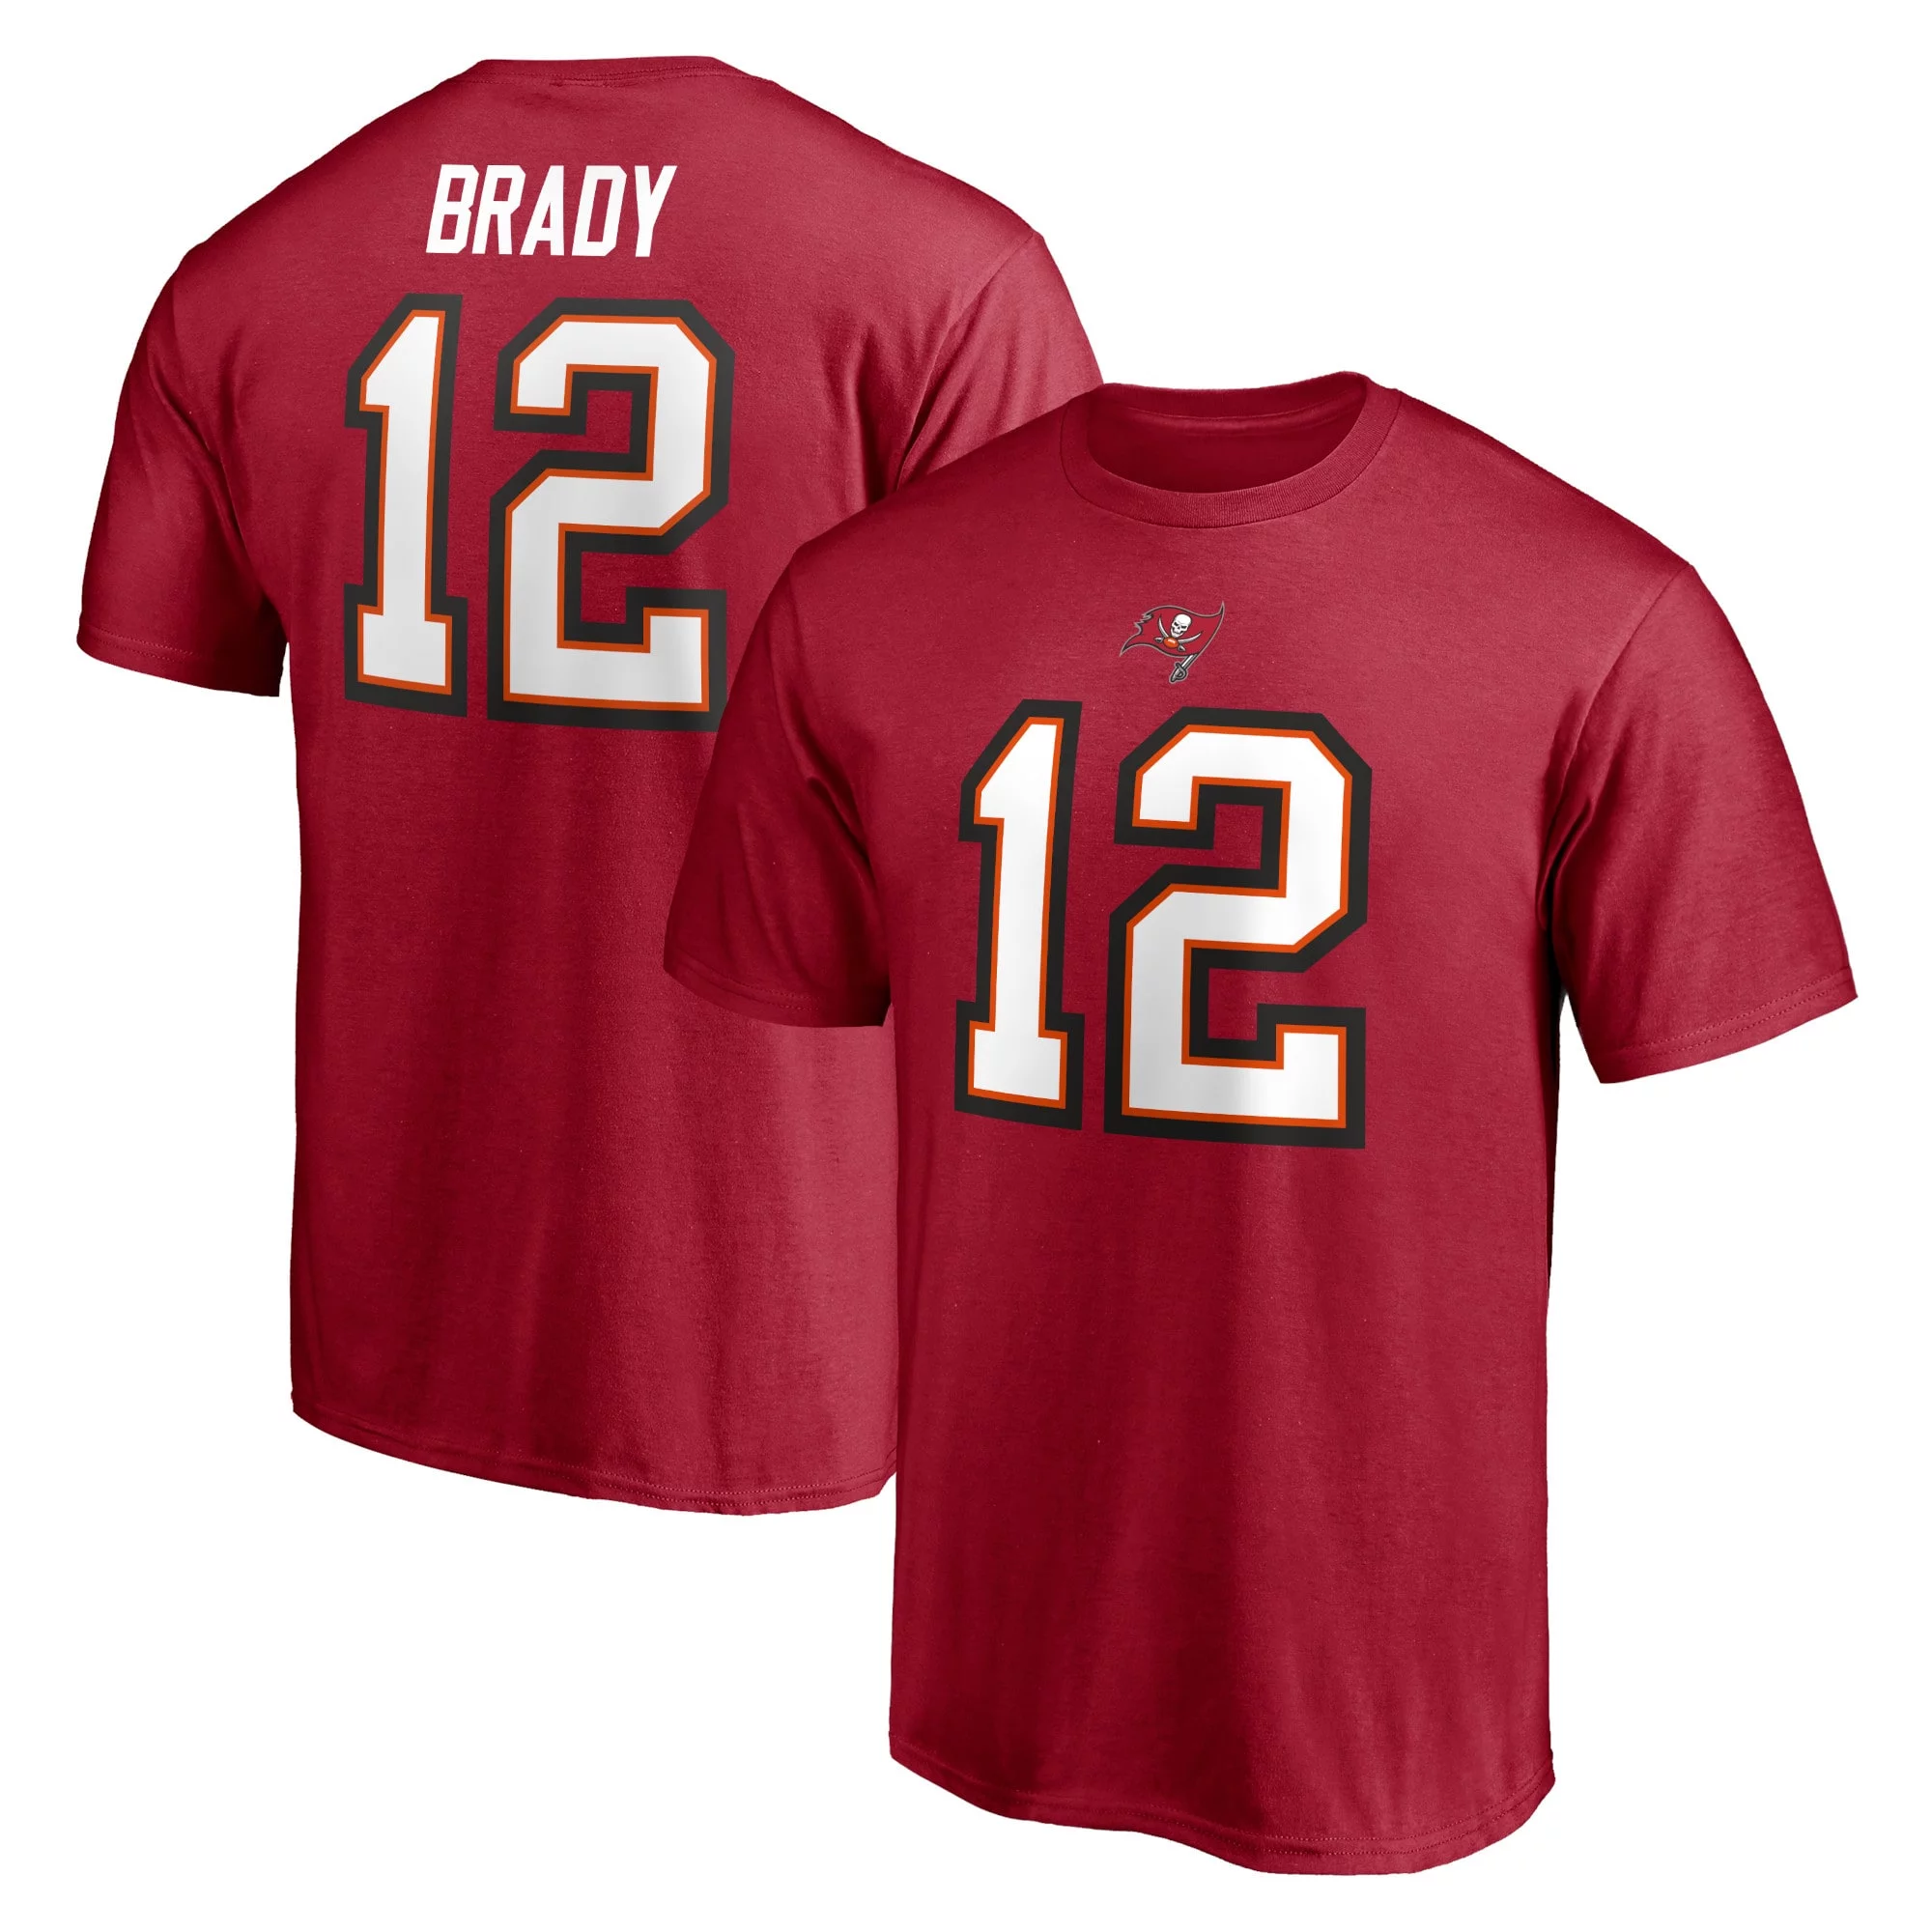 Men's Fanatics Branded Tom Brady Red Tampa Bay Buccaneers Athletic Coordinator T-Shirt